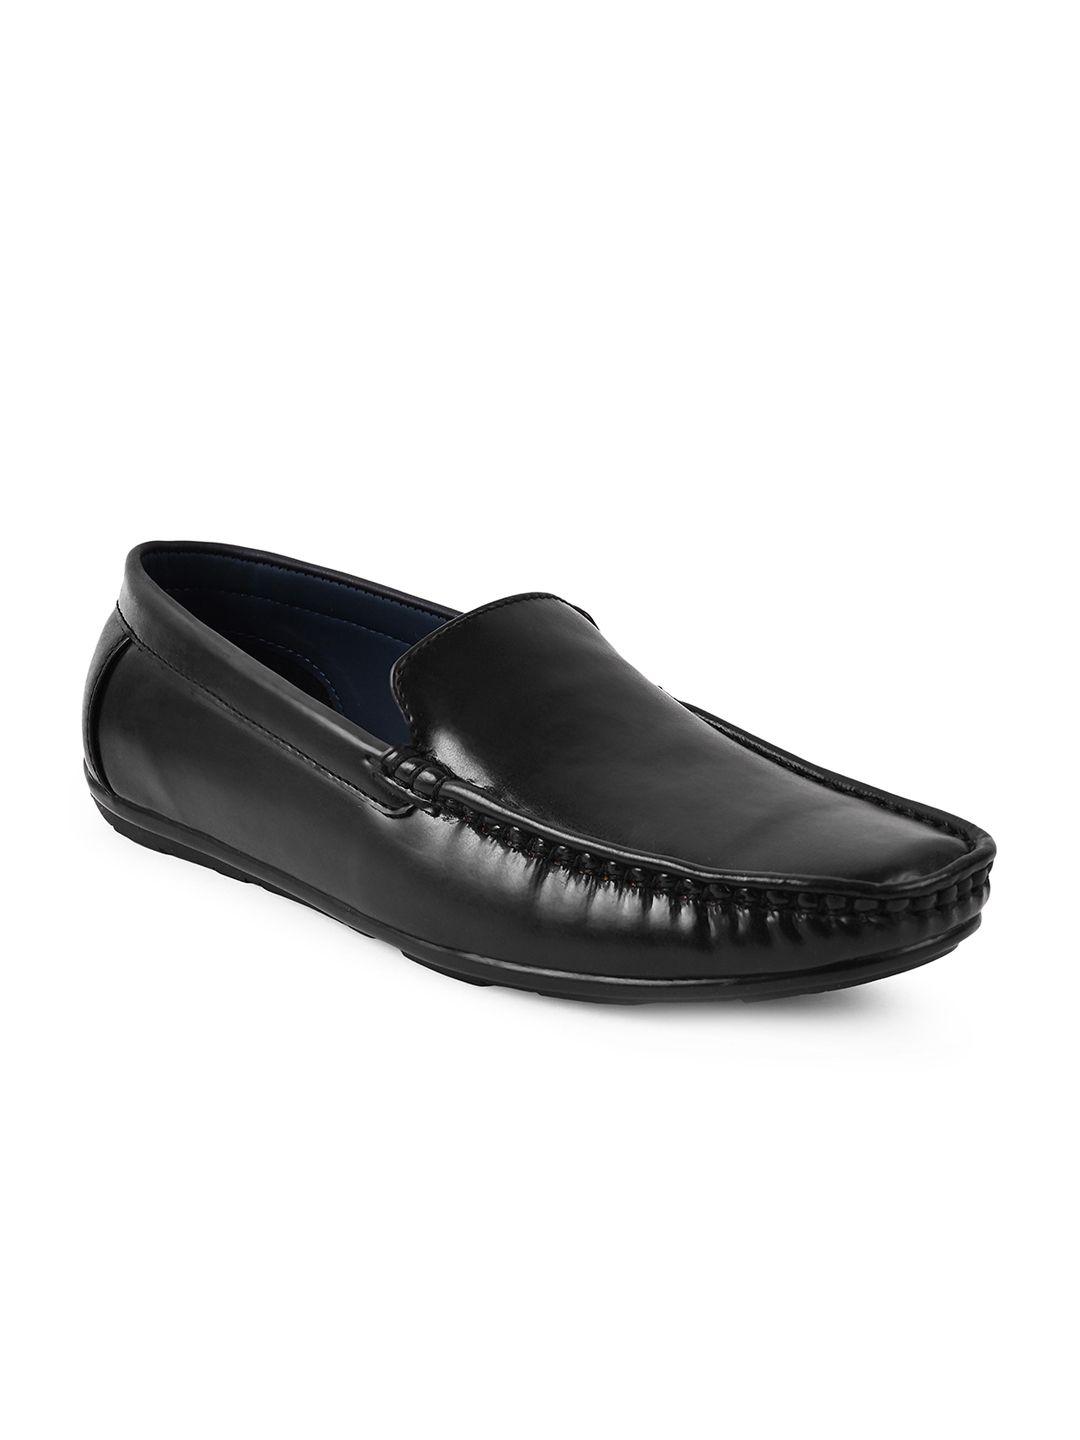 paragon-men-round--toe-formal-slip-on-loafers